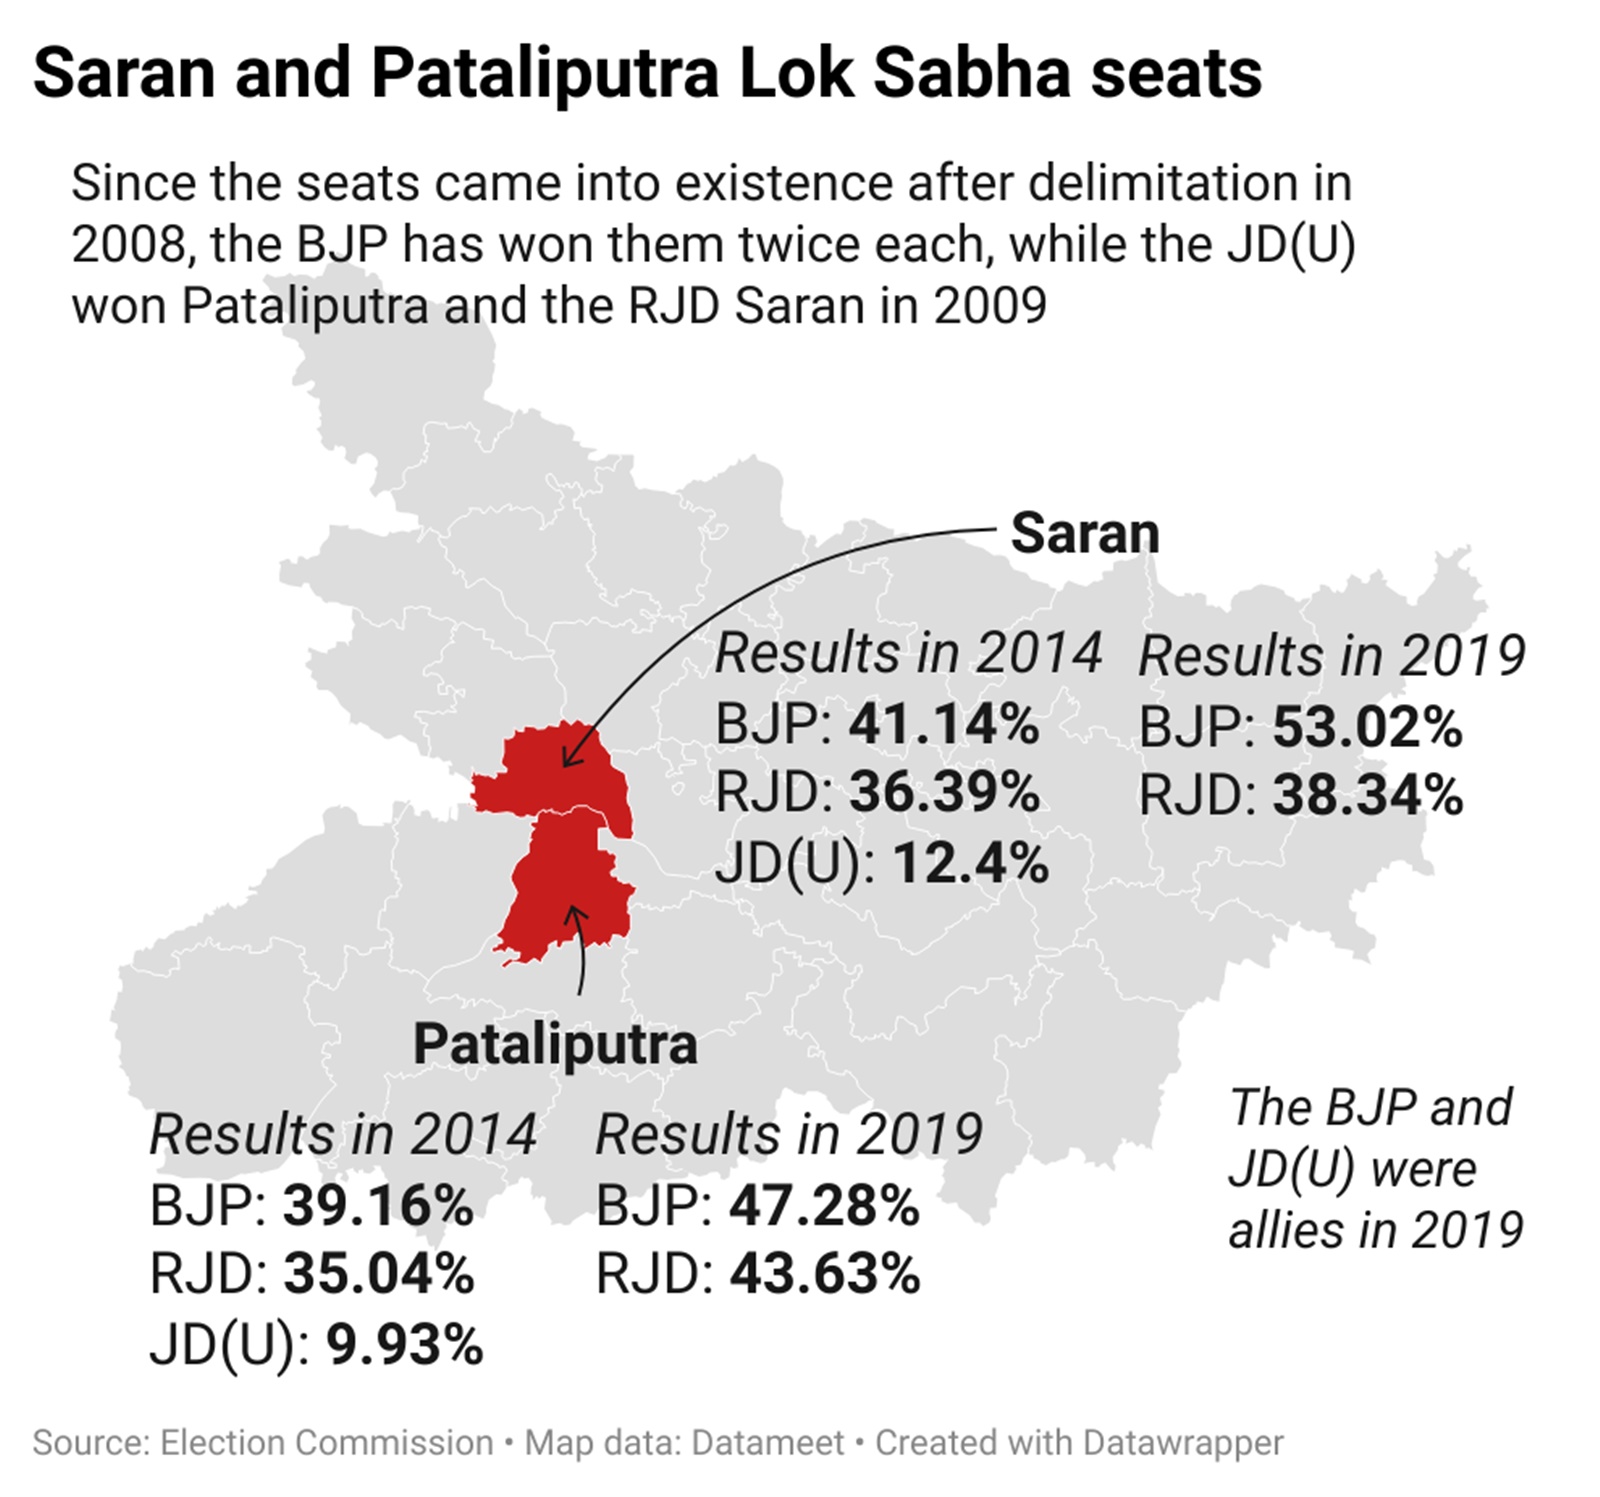 Saran Lok Sabha candidates, Lalu Prasad Yadav daughters